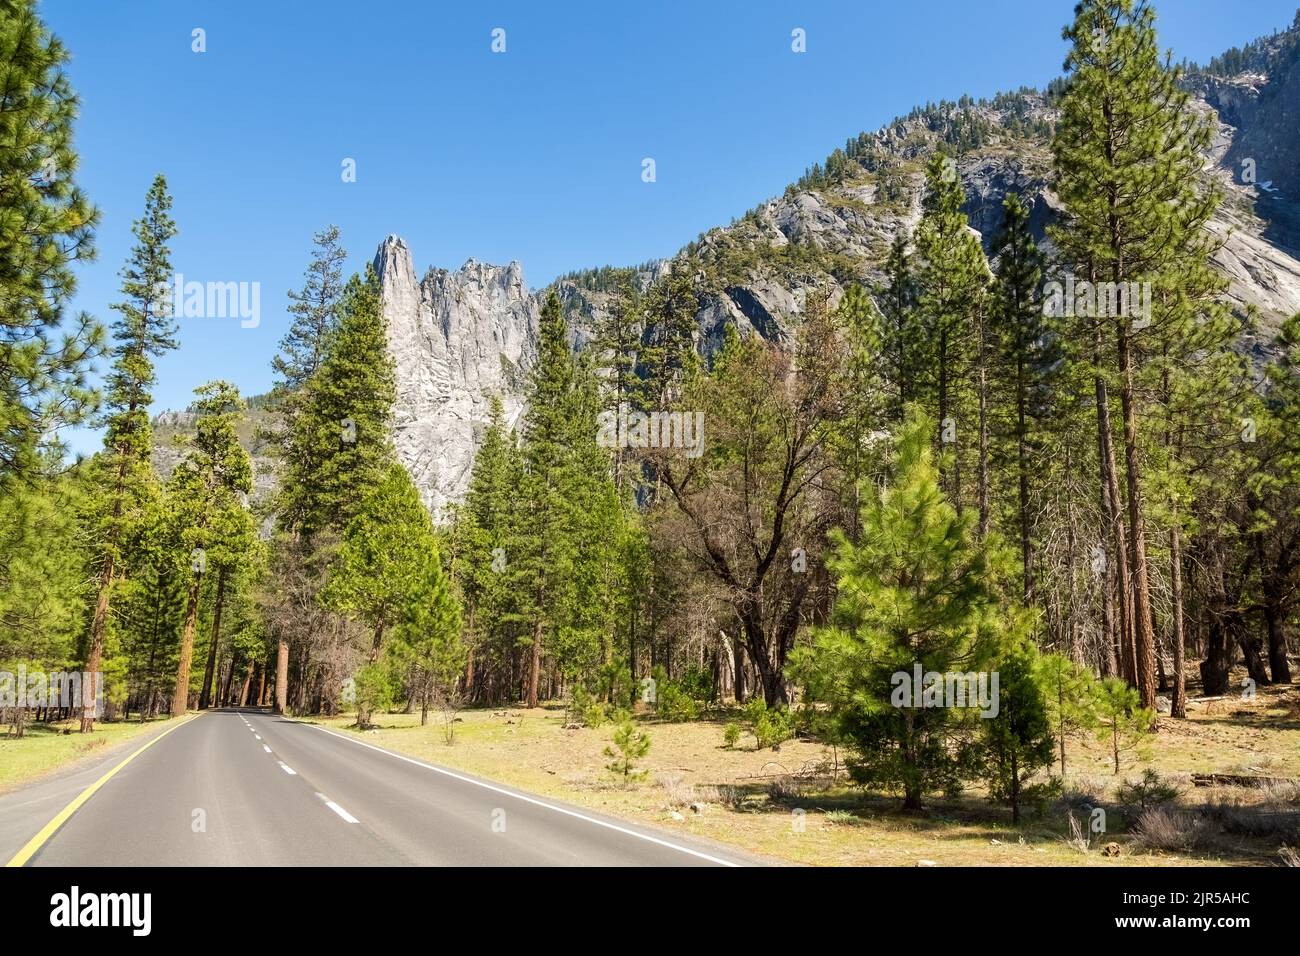 The road through Yosemite National Park, California, USA. Stock Photo